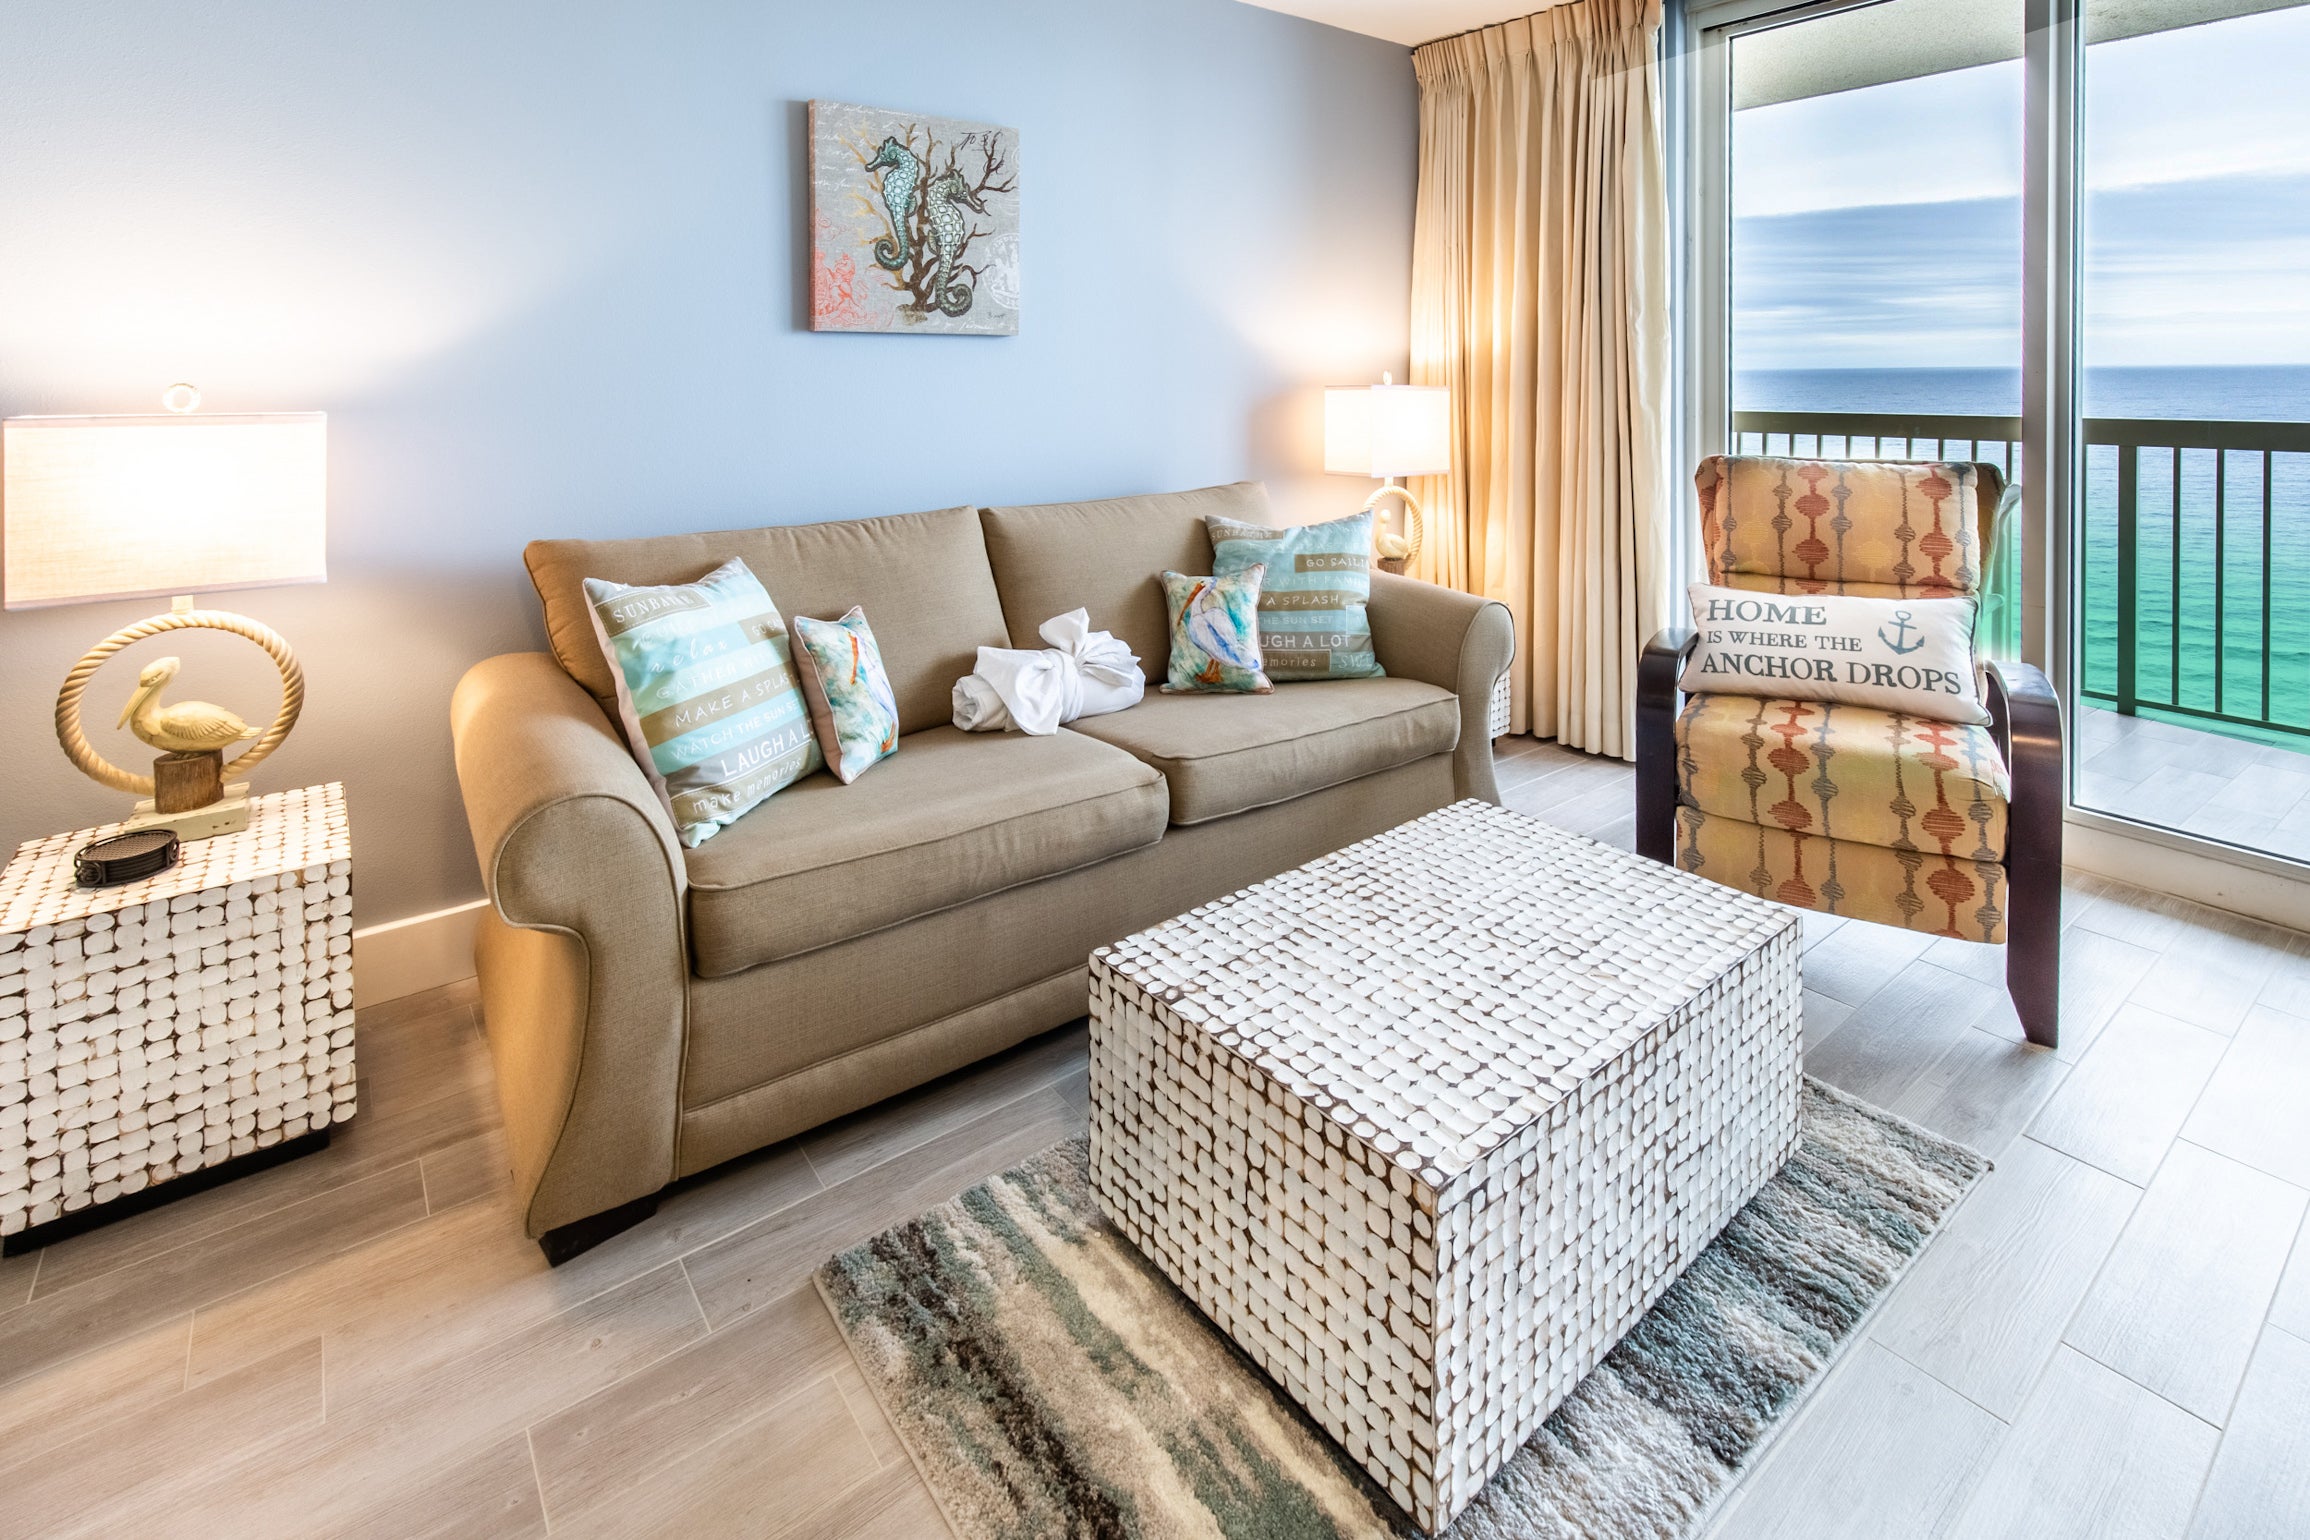 Comfortable furnishings and beachy decor